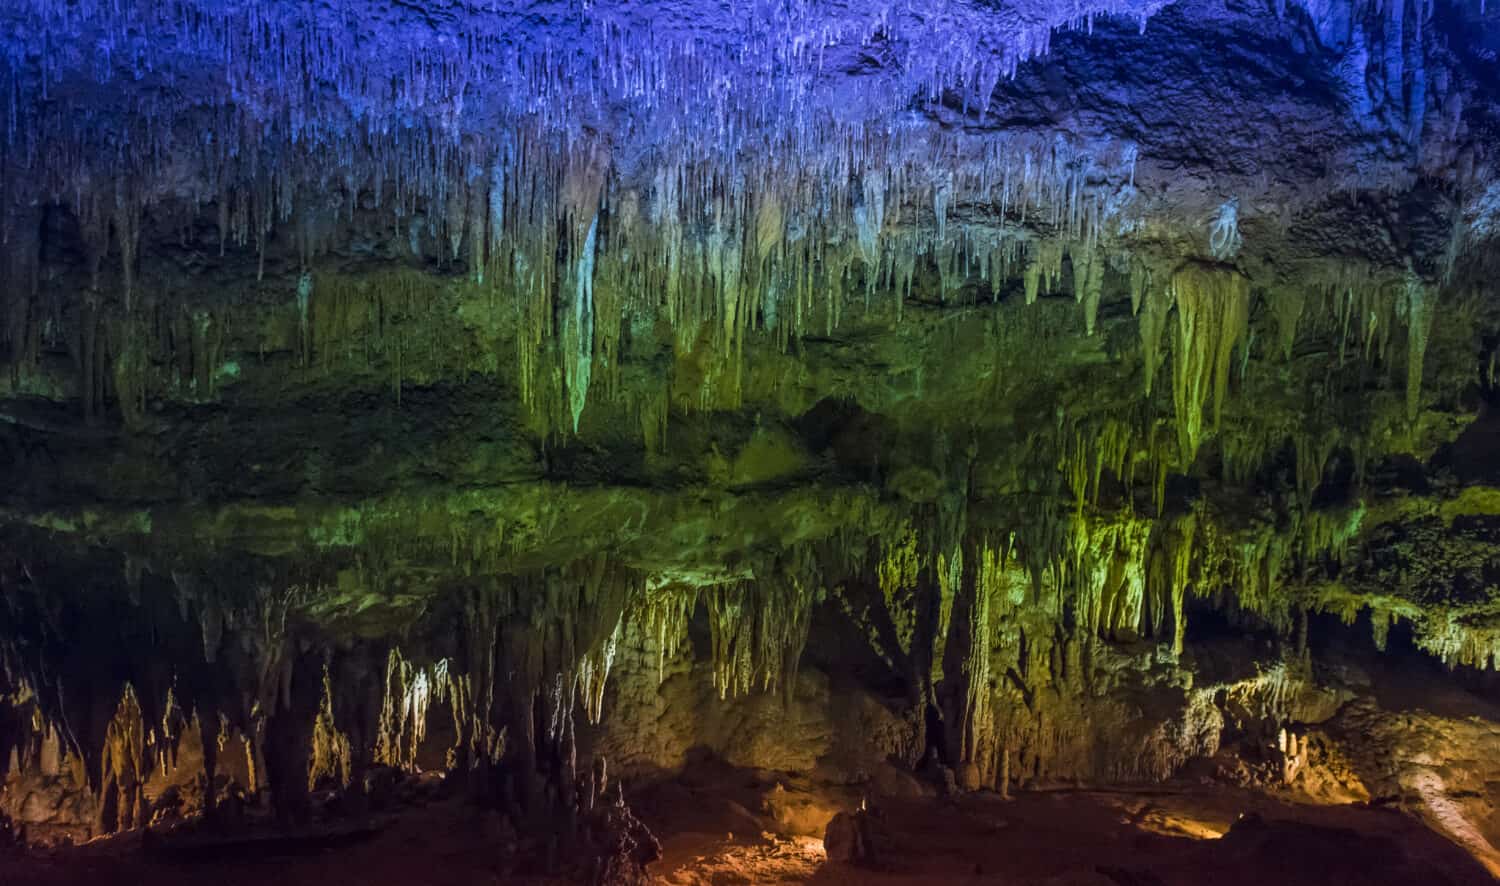 Stalactites and stalagmites in Luray Caverns, Virginia, USA.